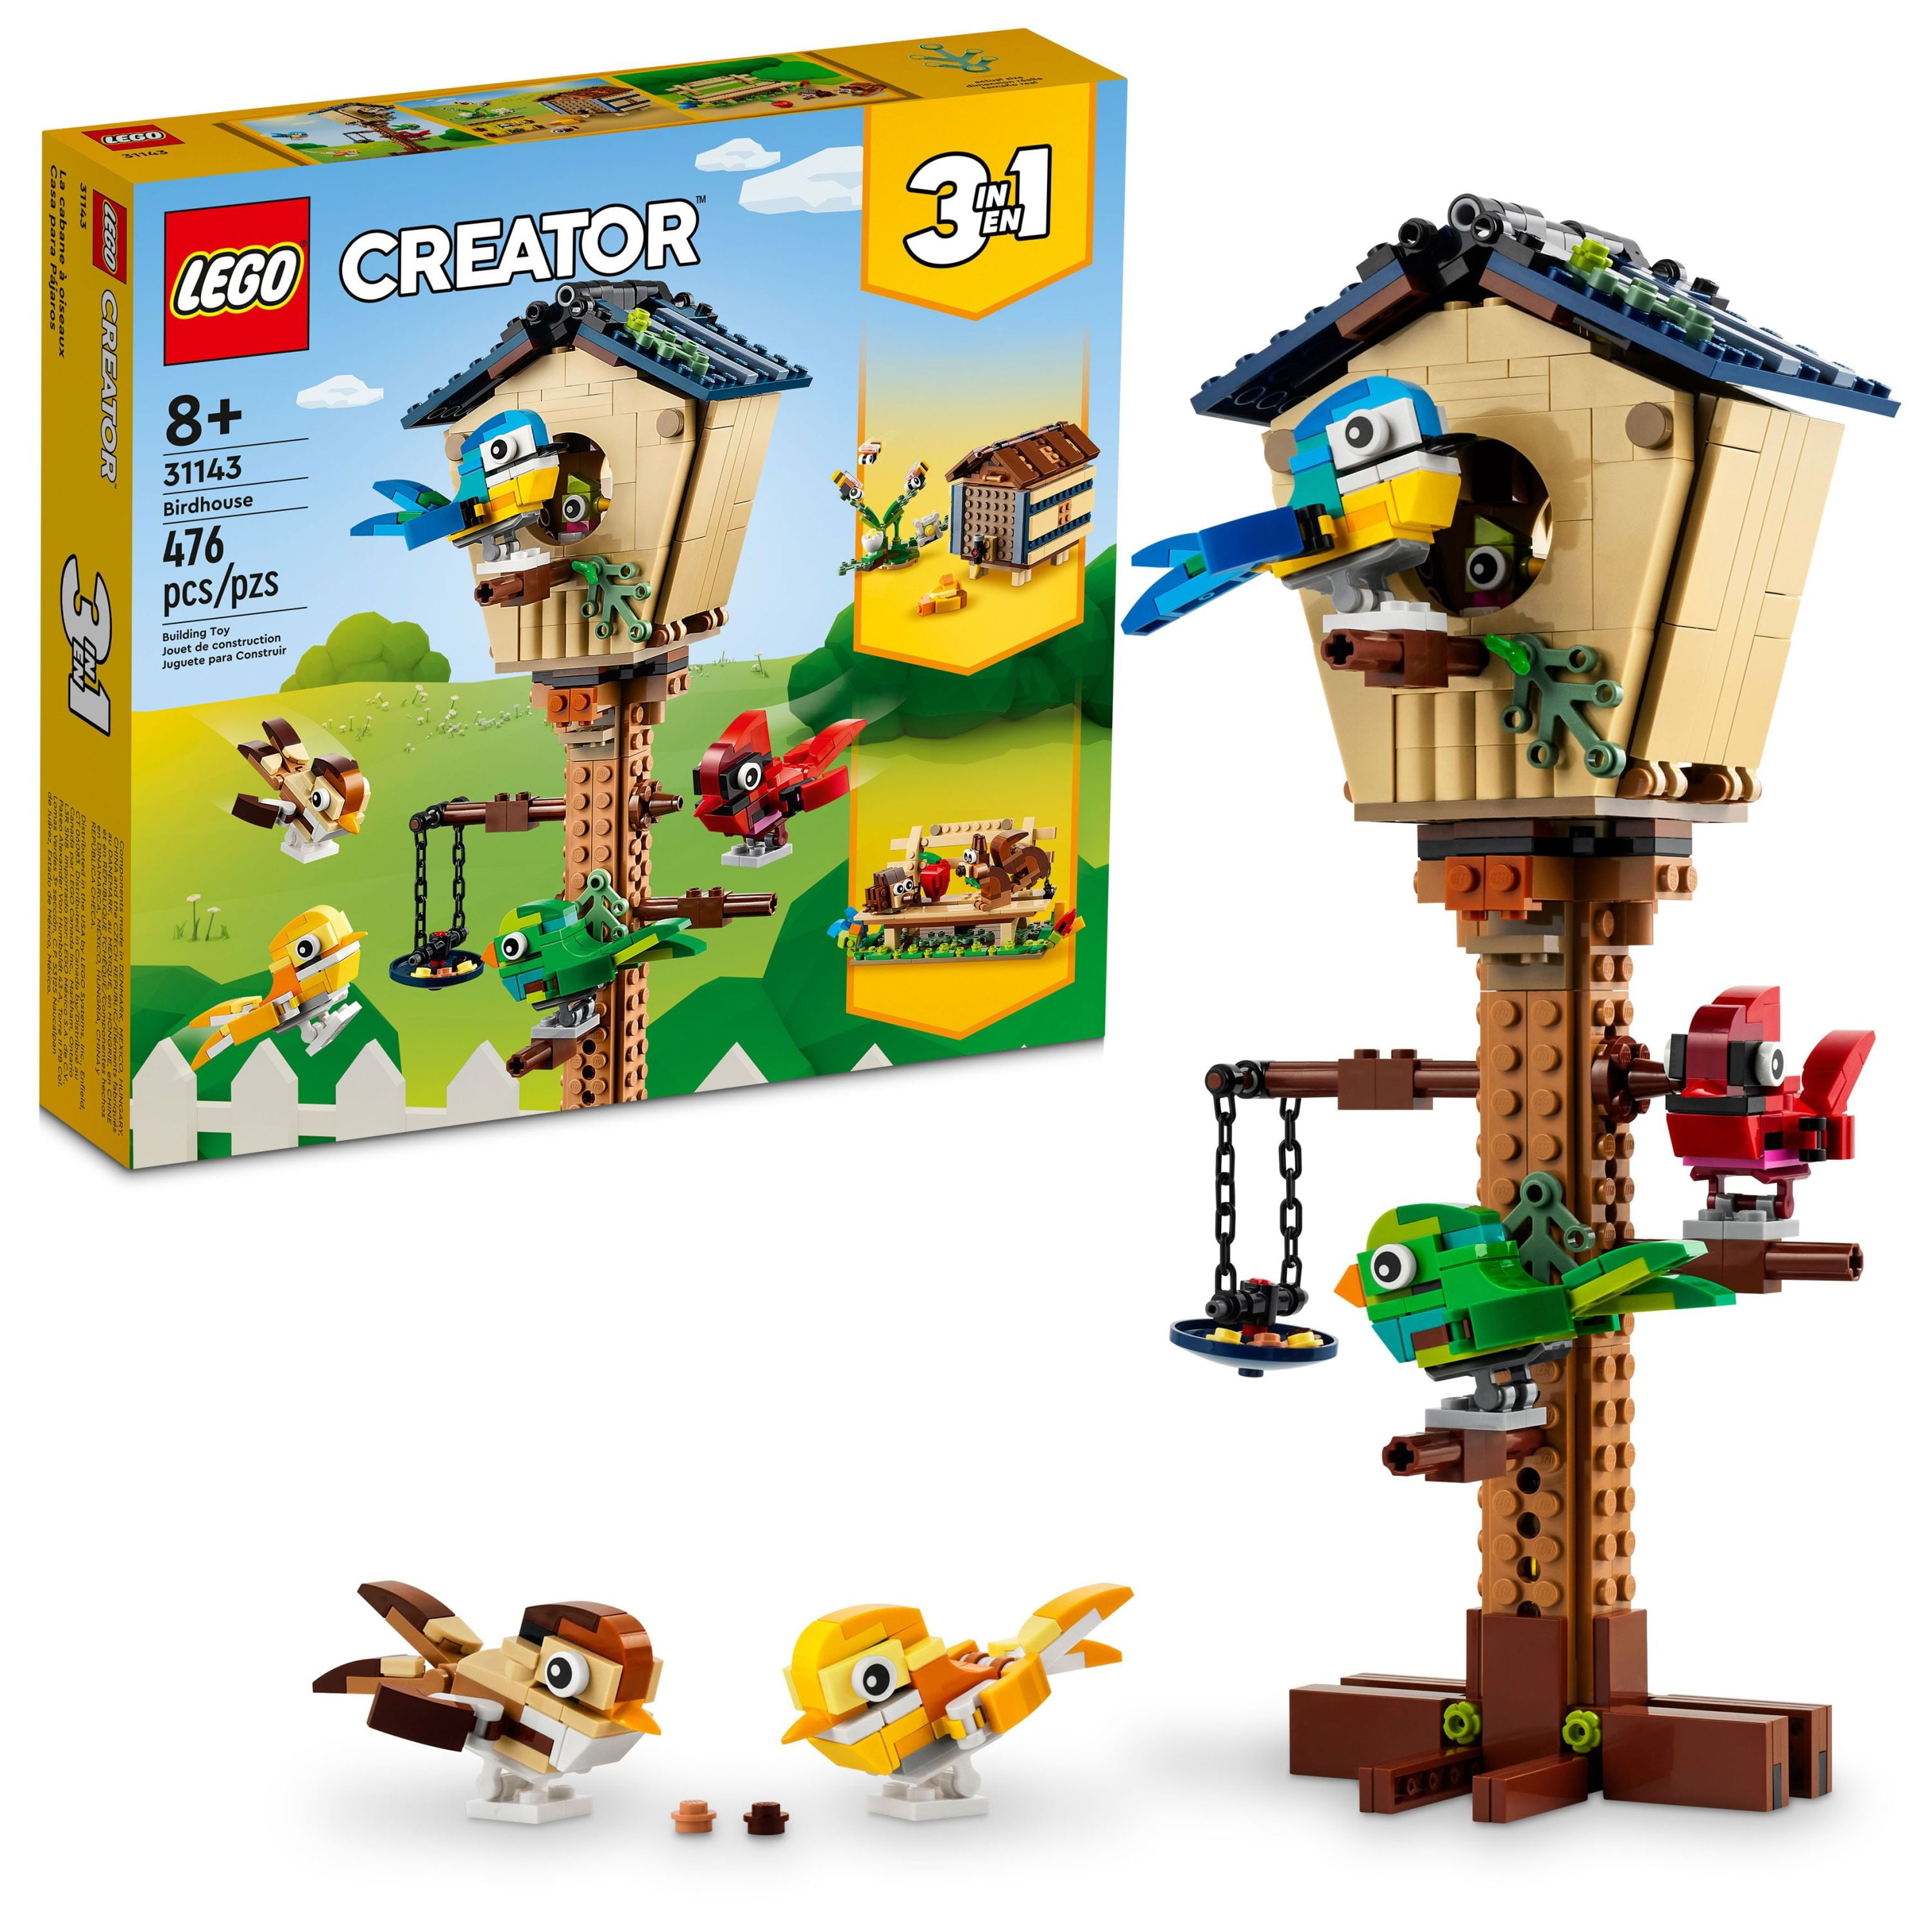 LEGO Creator 3in1 Birdhouse 31143 Building Toy Set (476 Pieces)